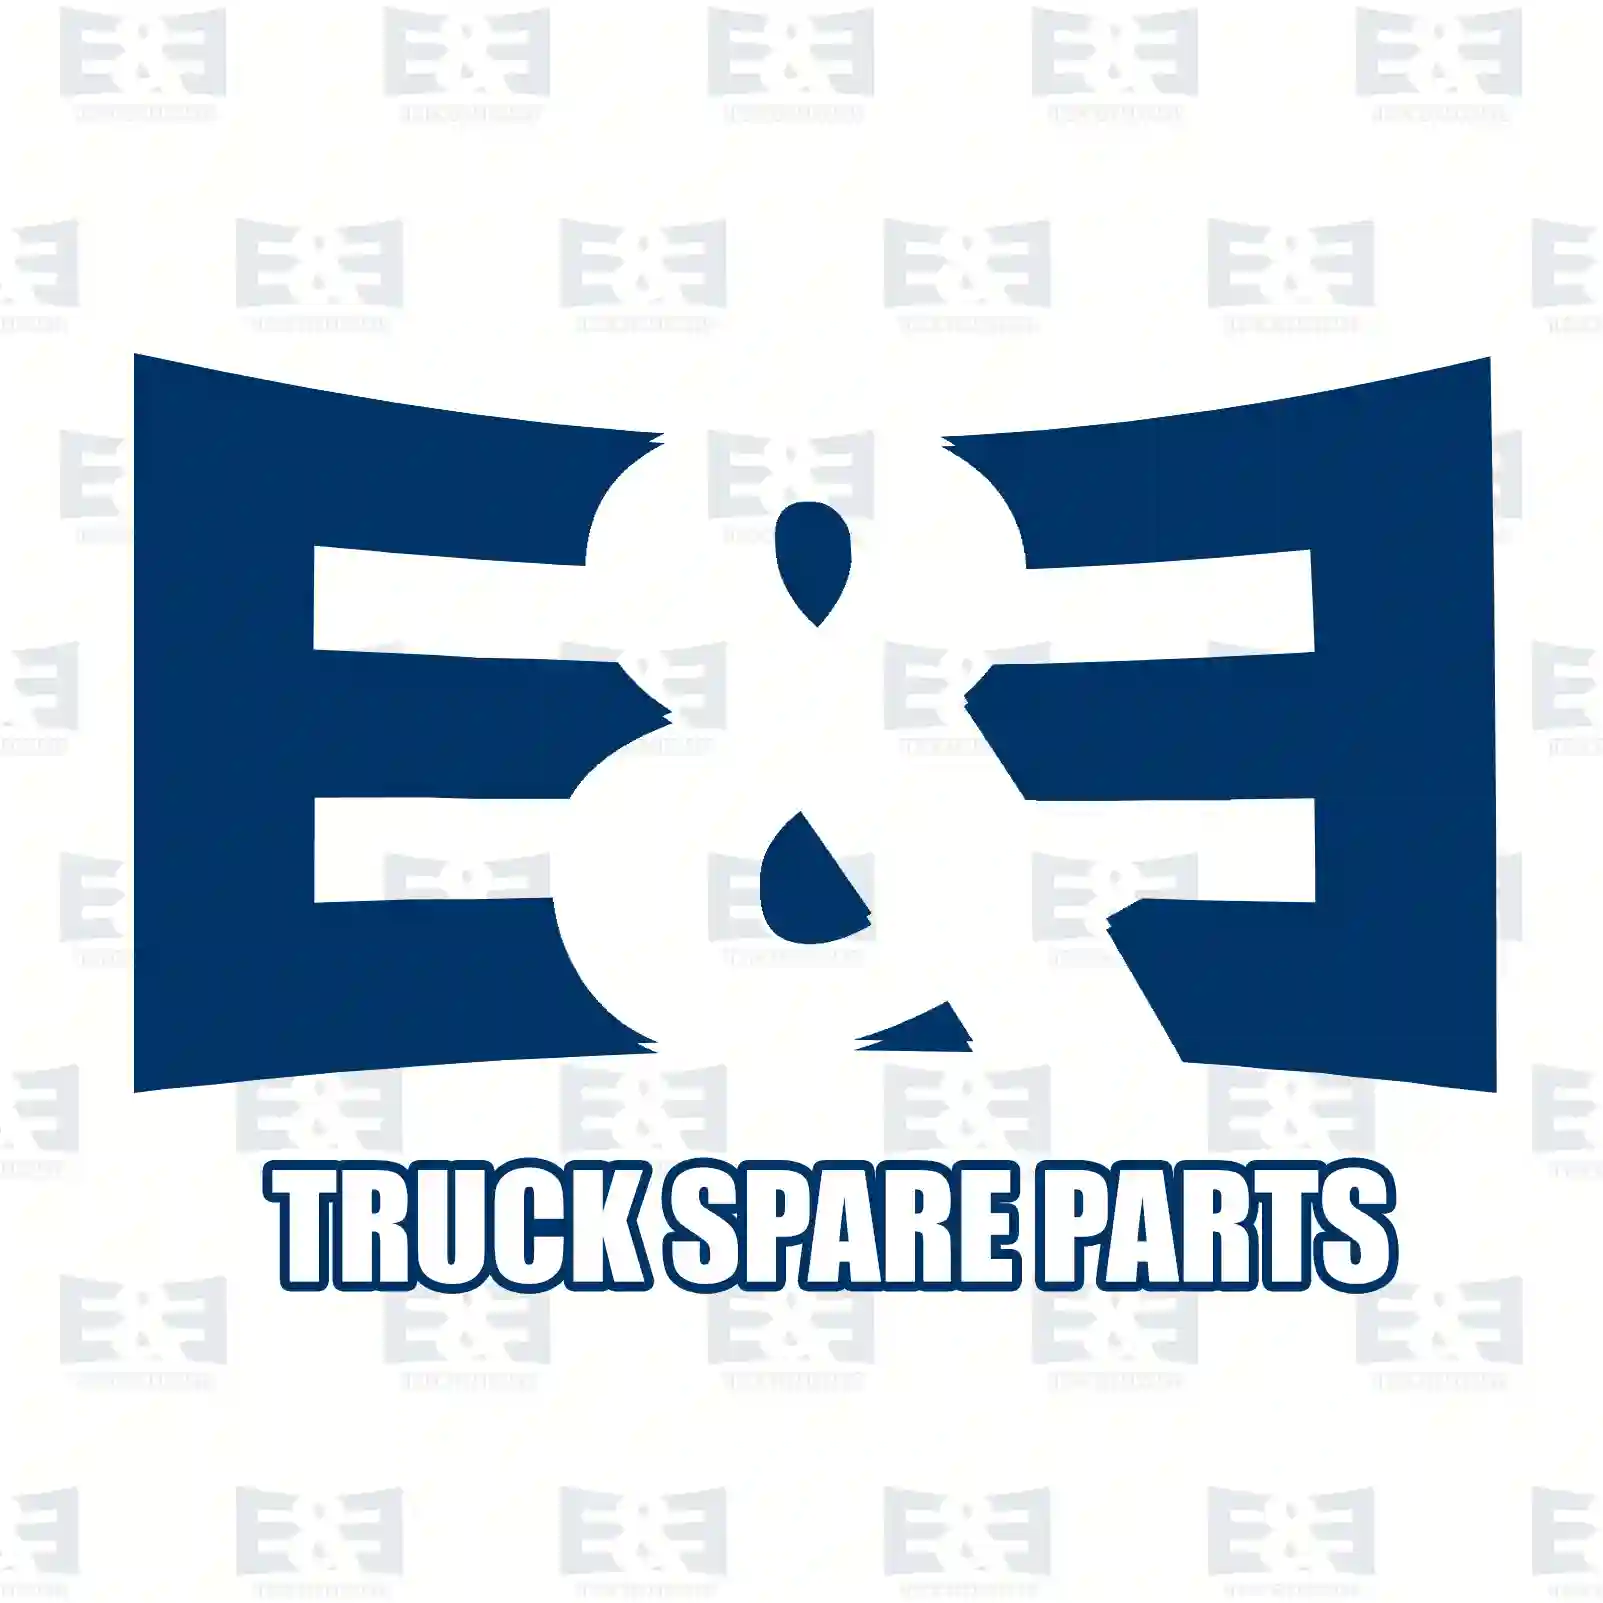 Ball joint, left hand thread, 2E2277847, 1330986, 0009966745, 0009969445 ||  2E2277847 E&E Truck Spare Parts | Truck Spare Parts, Auotomotive Spare Parts Ball joint, left hand thread, 2E2277847, 1330986, 0009966745, 0009969445 ||  2E2277847 E&E Truck Spare Parts | Truck Spare Parts, Auotomotive Spare Parts